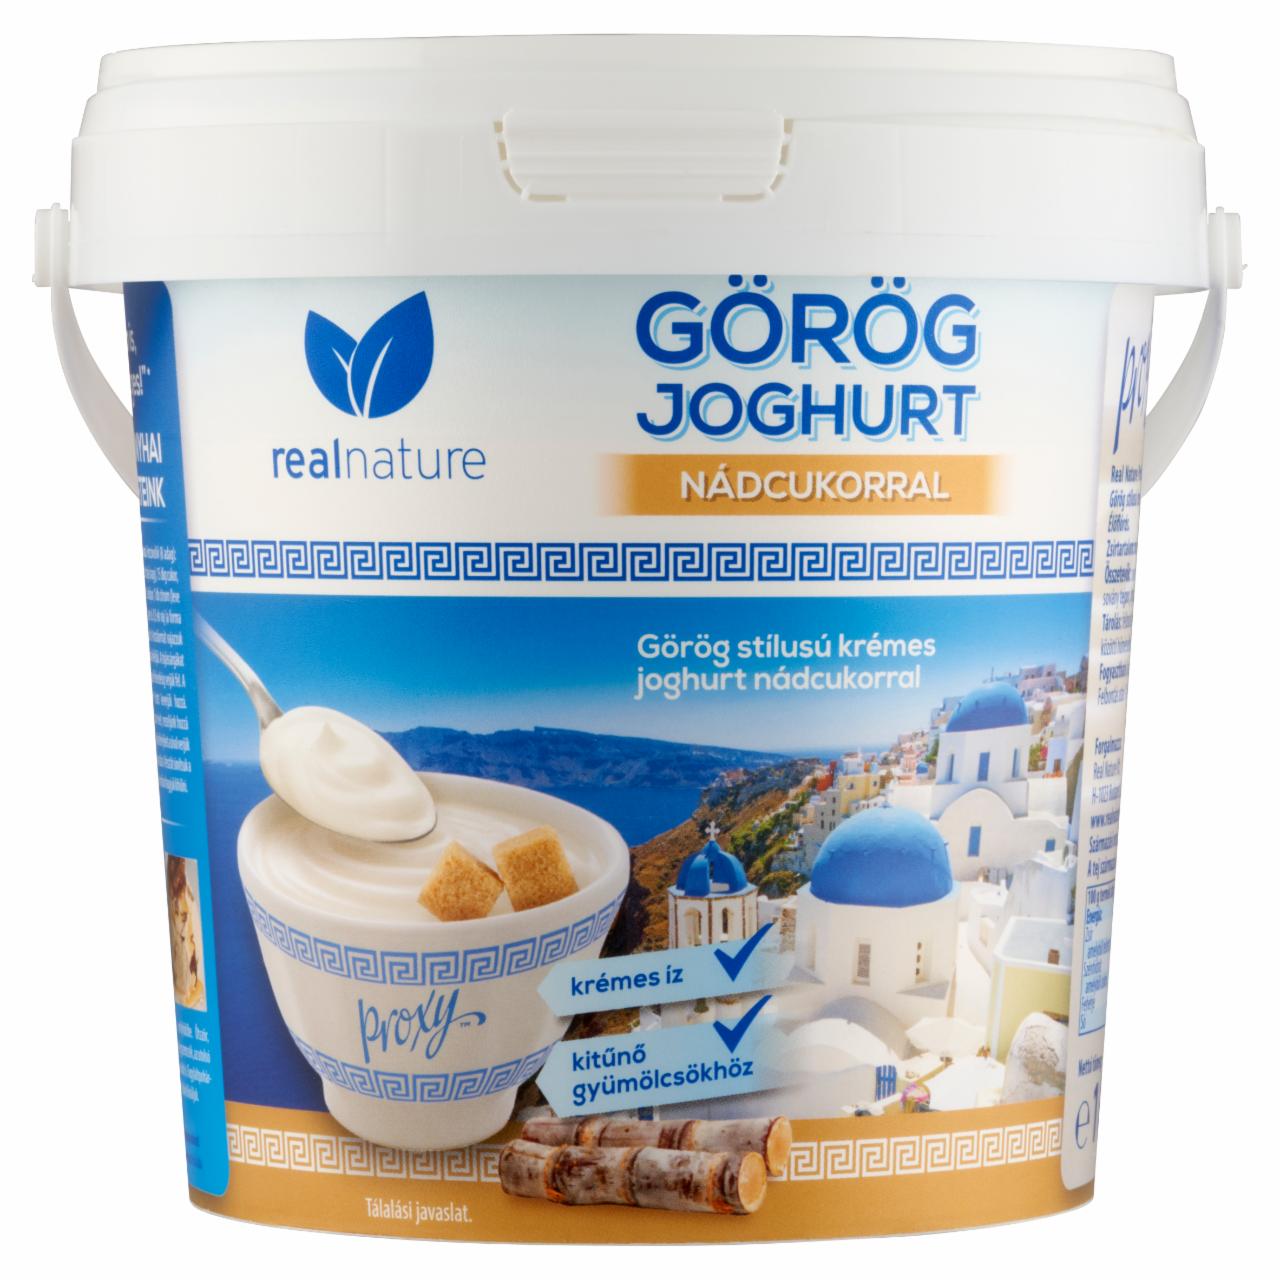 Képek - Real Nature Proxy görög joghurt nádcukorral 1 kg